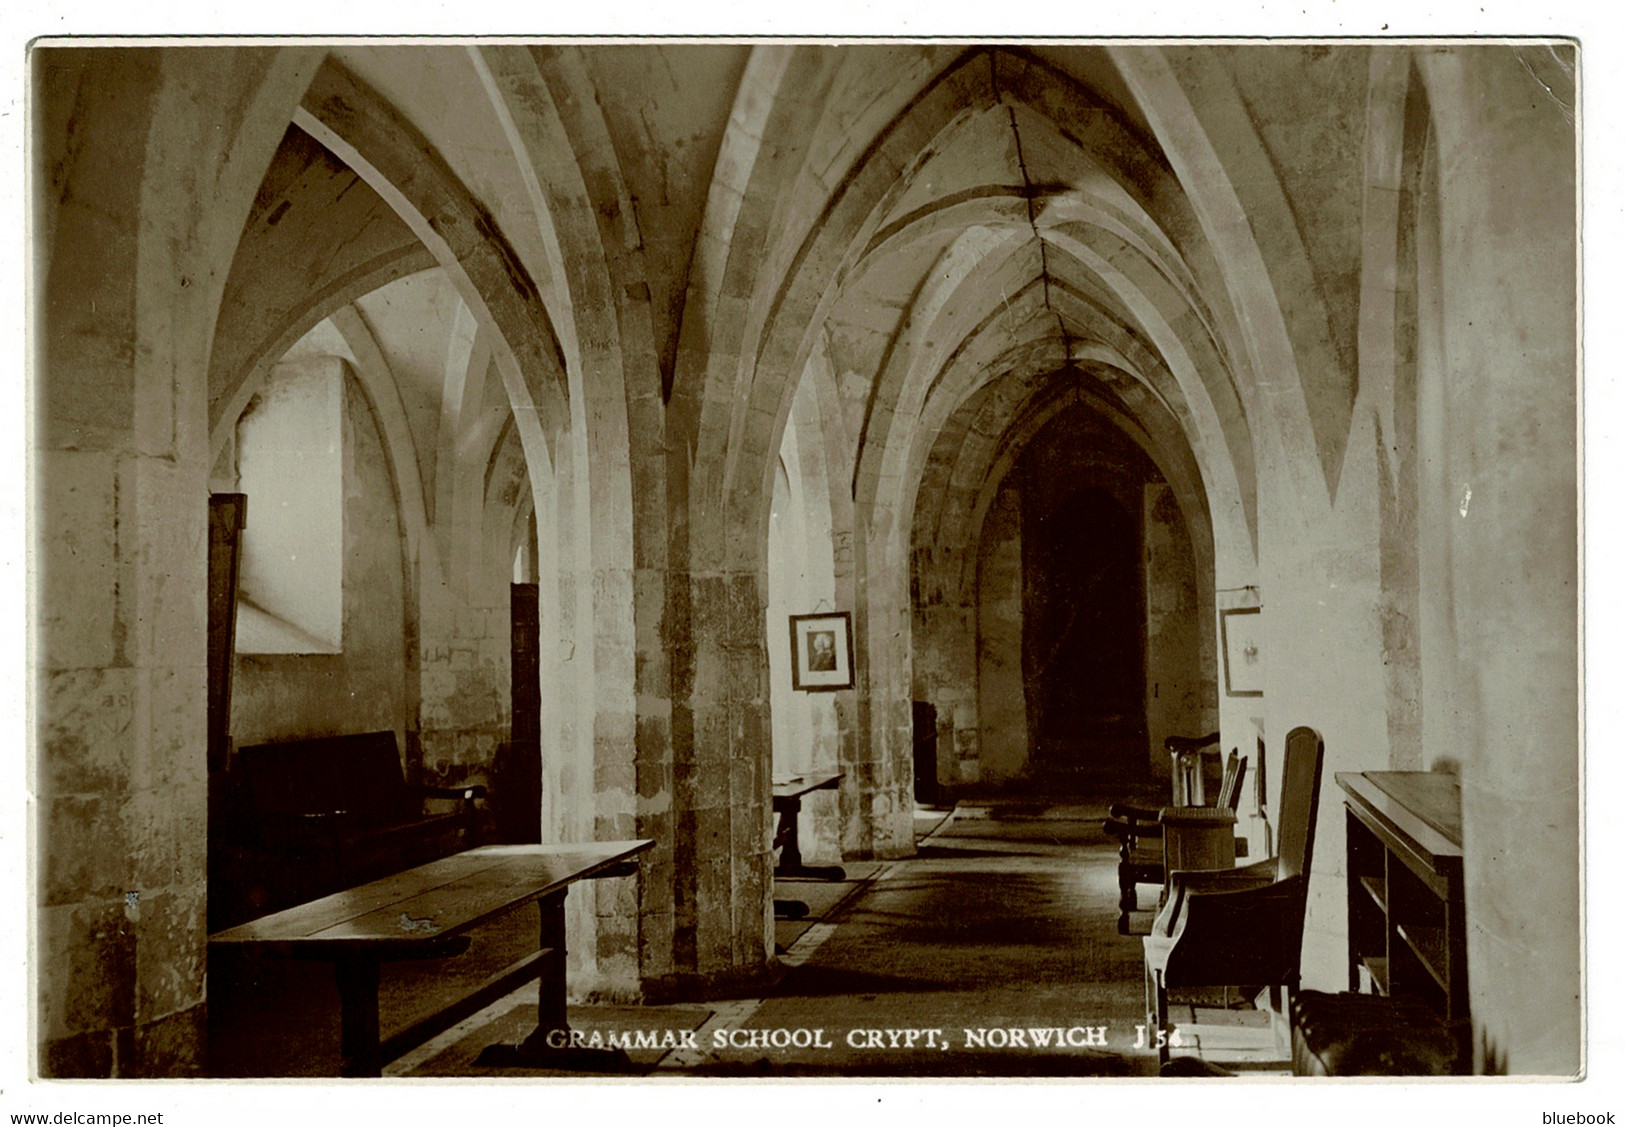 Ref 1445 - Early Jarrold Real Photo Postcard - Grammar School Crypt - Norwich Norfolk - Norwich